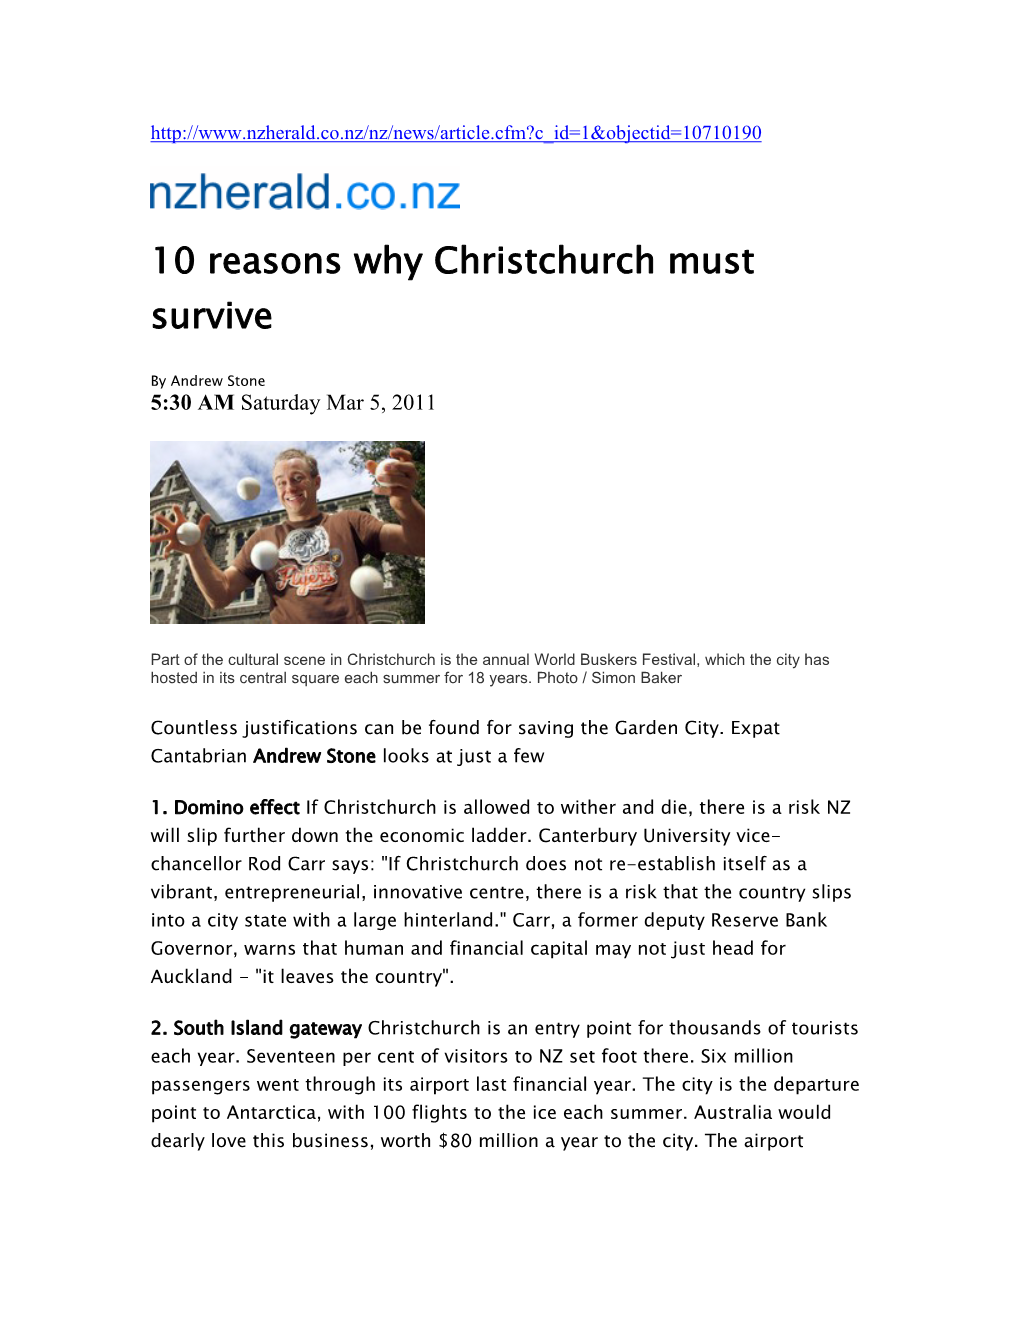 Christchurch Must Survive